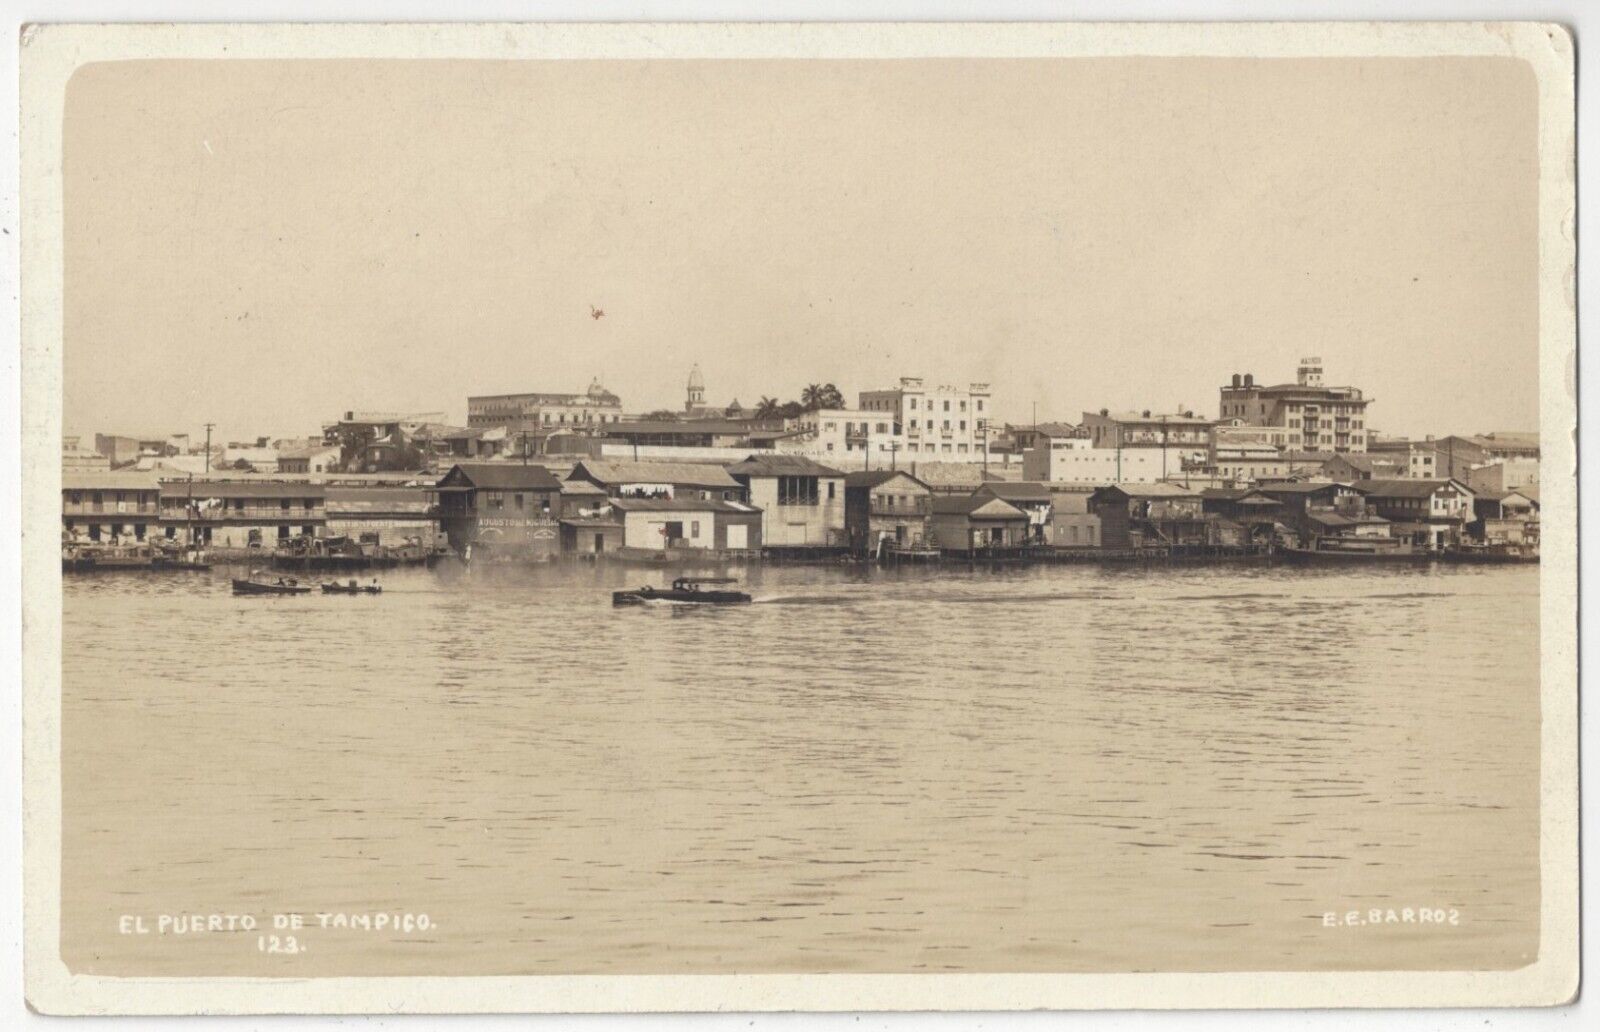 1926 Tampico, Tamaulipas, Mexico - REAL PHOTO Town & Port - Vintage Postcard